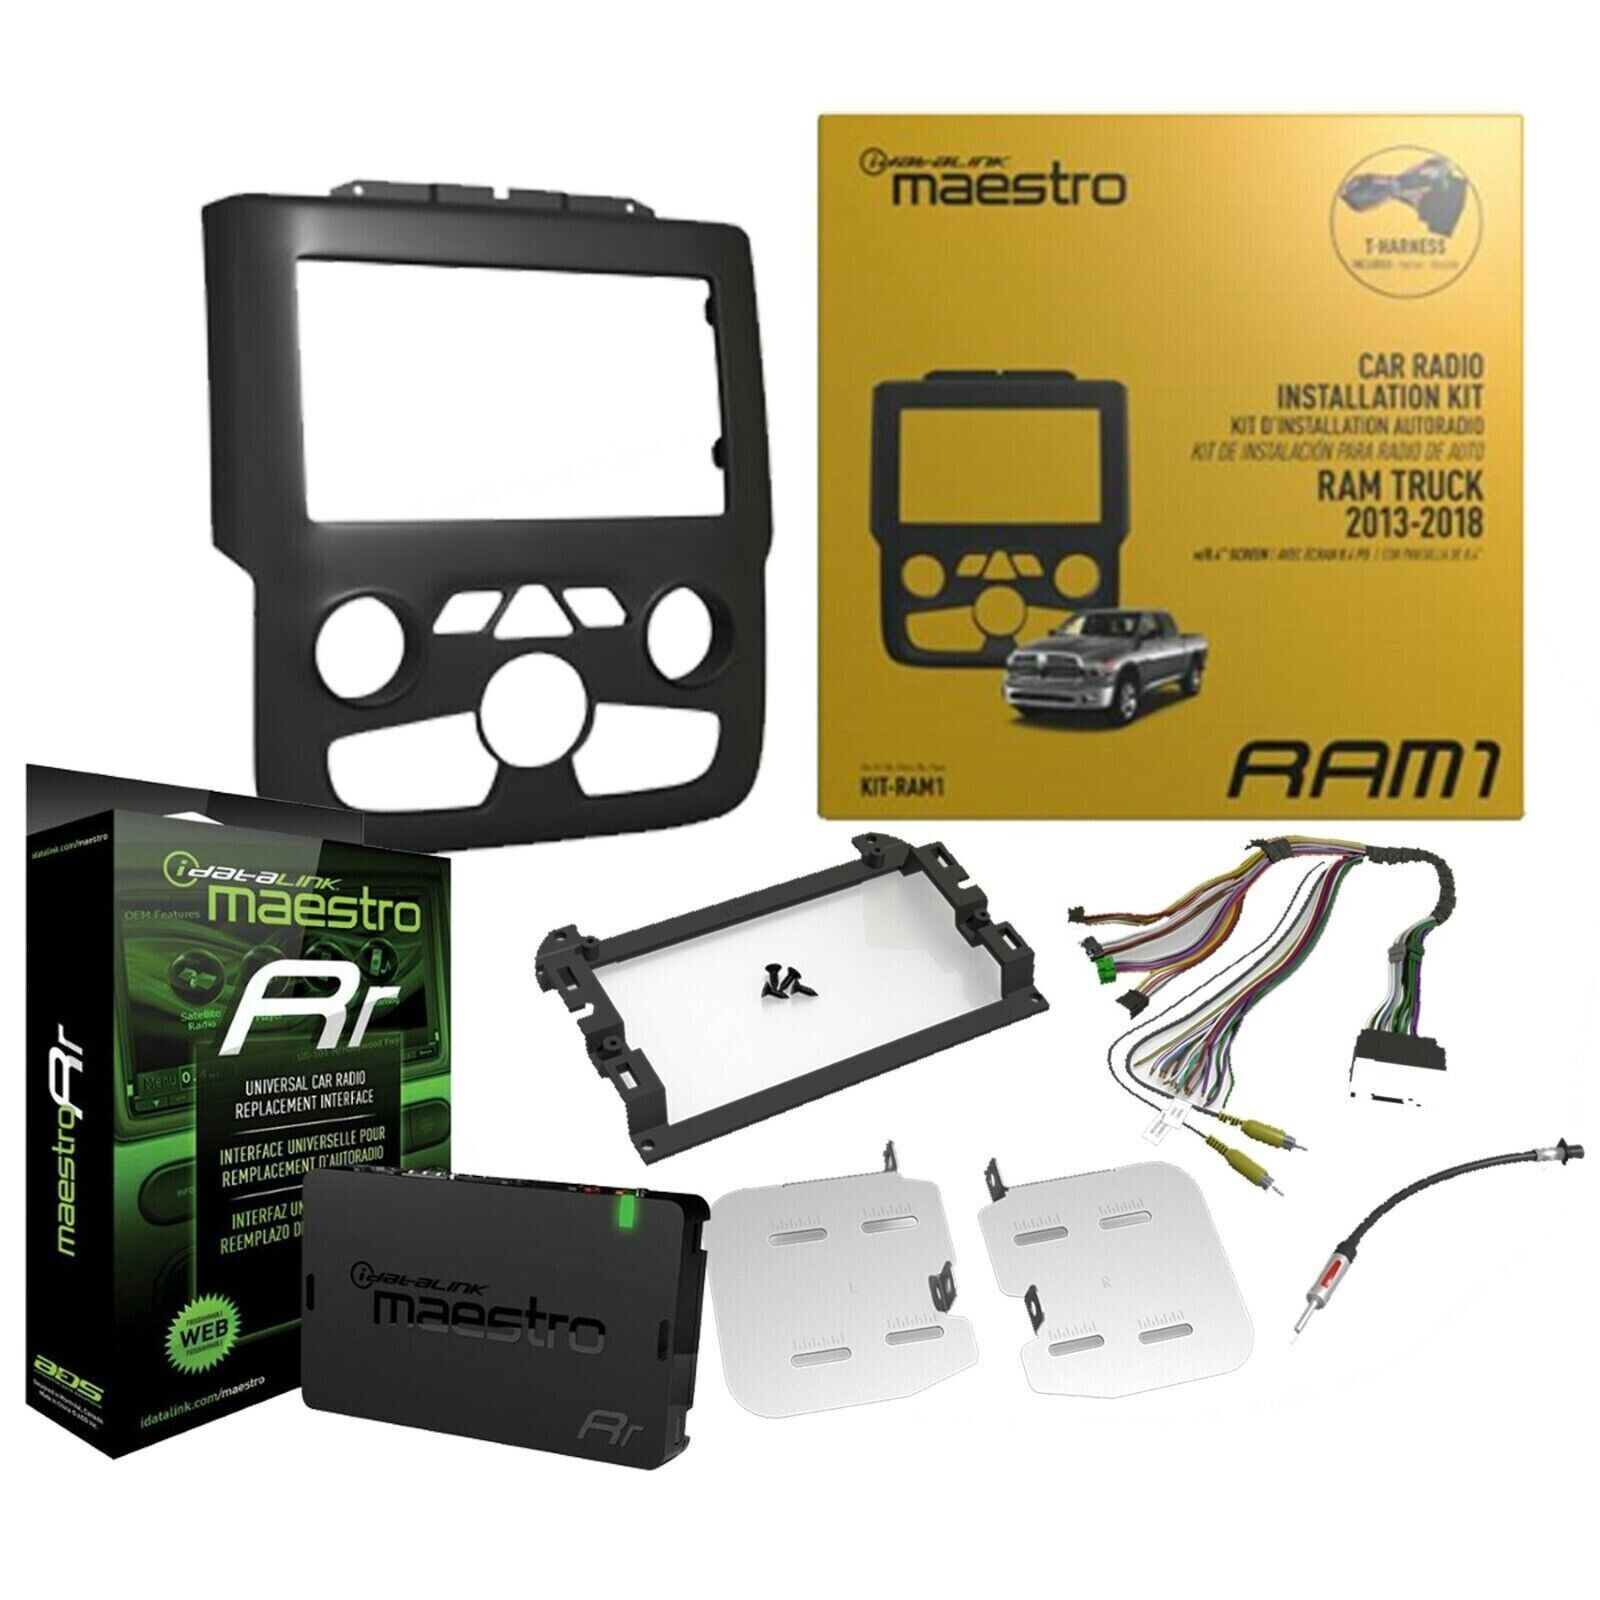 iDatalink Maestro KIT-RAM1 ADS-MRR Car Radio Installation Dash Kit for 2013+ RAM